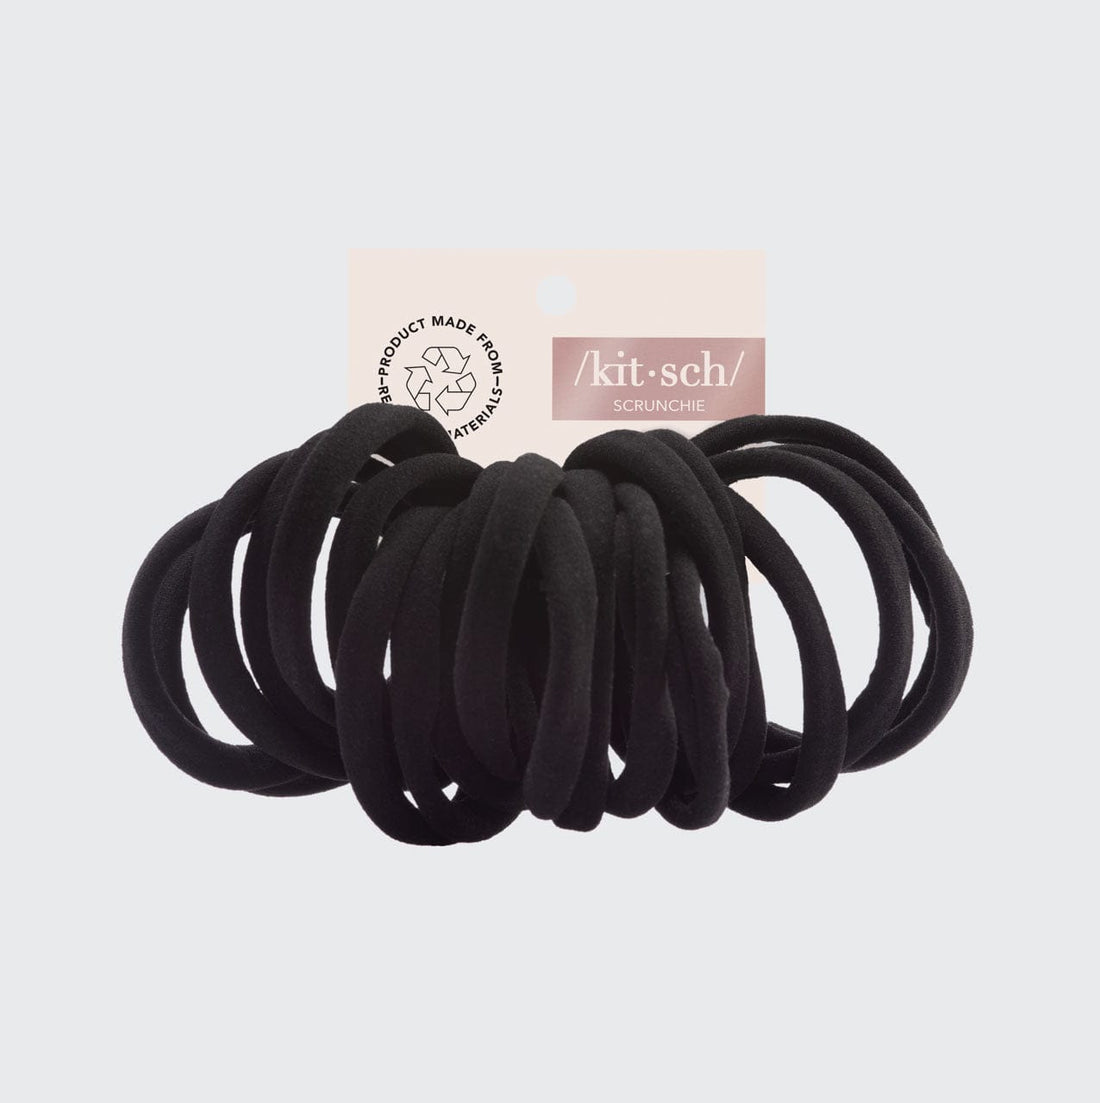 Standard-Gummibänder aus recyceltem Polyester, 20 Stück – Schwarz